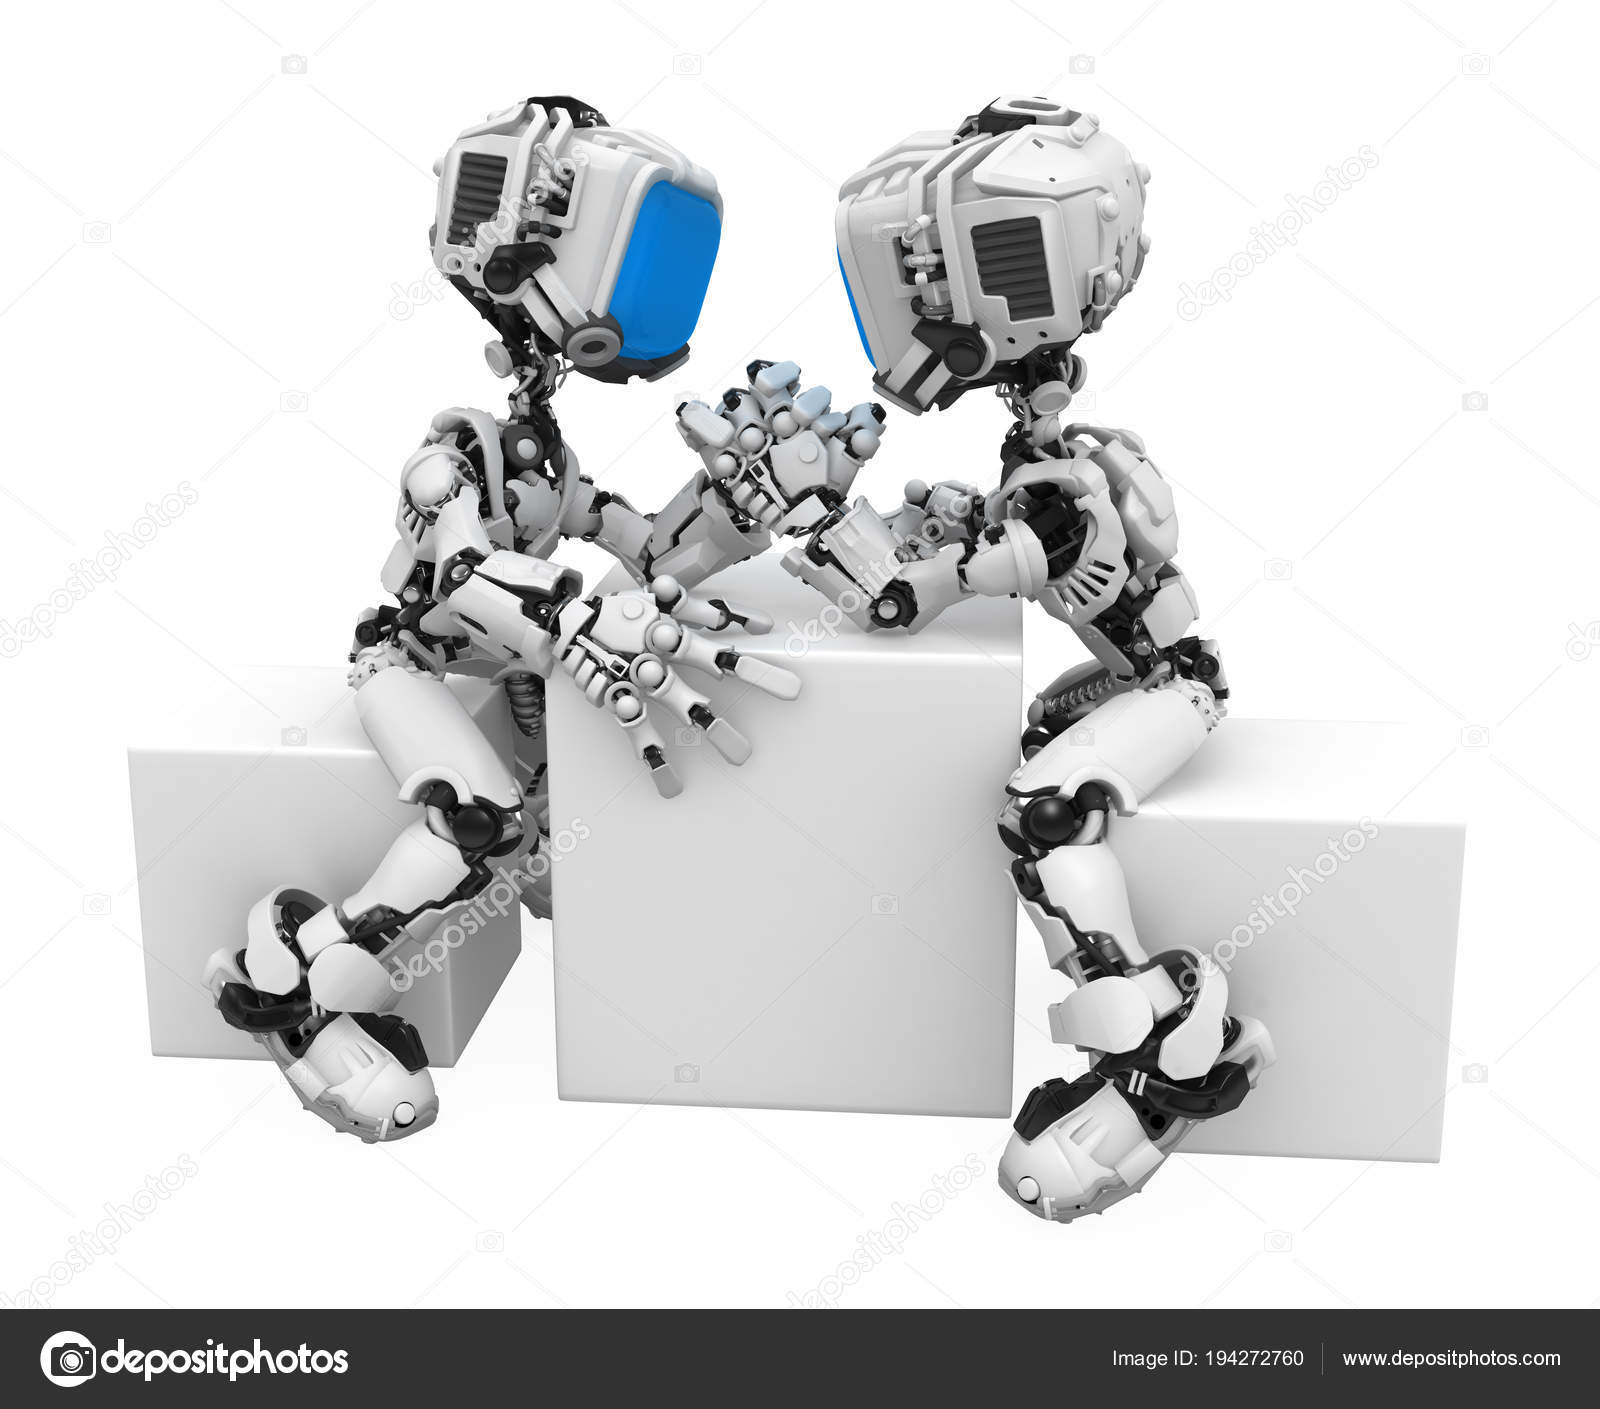 depositphotos_194272760-stock-photo-blue-screen-robot-arm-wrestling.jpg